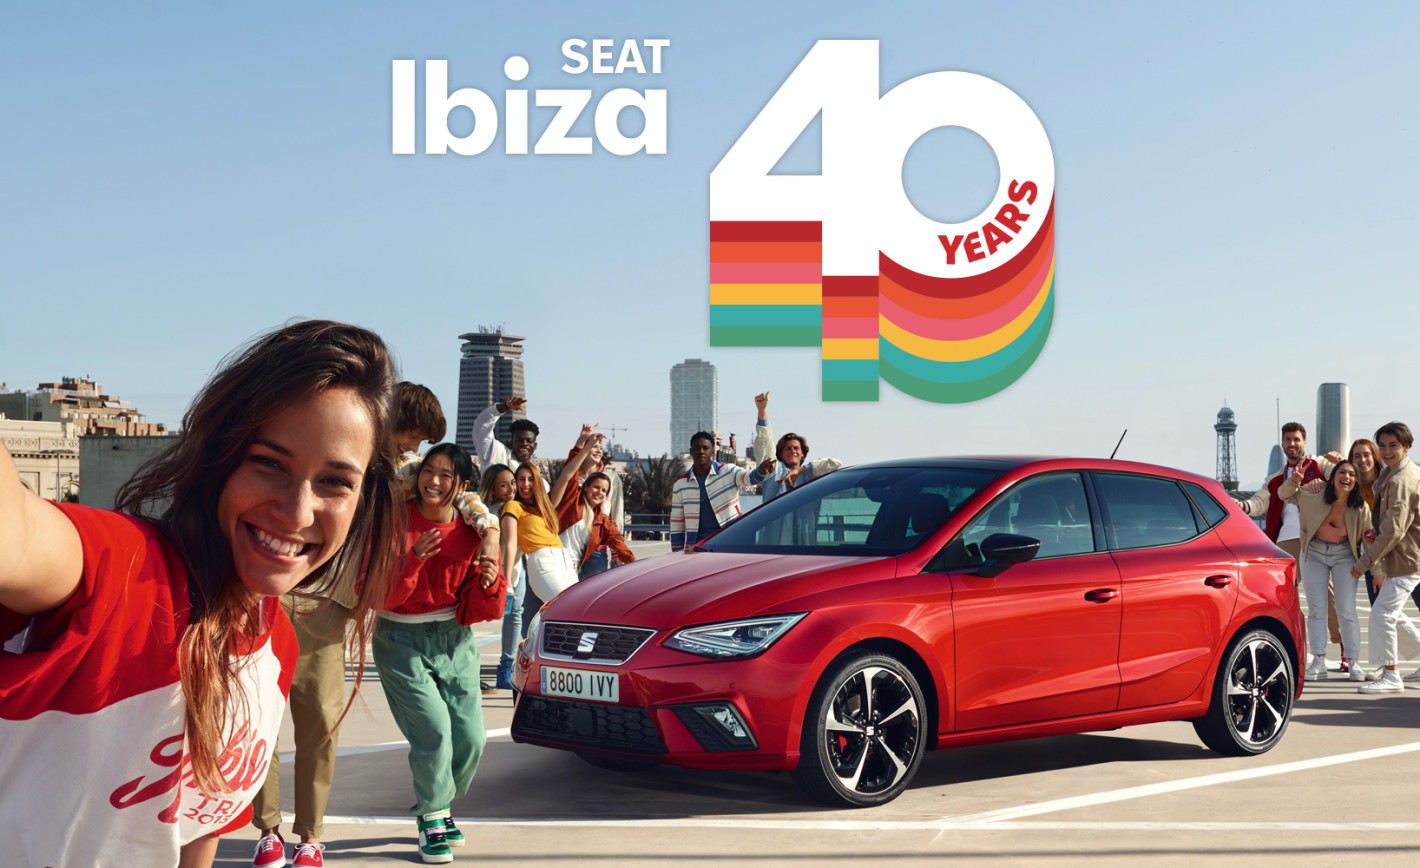 Groep Thoen Seat Ibiza 40th anniversary